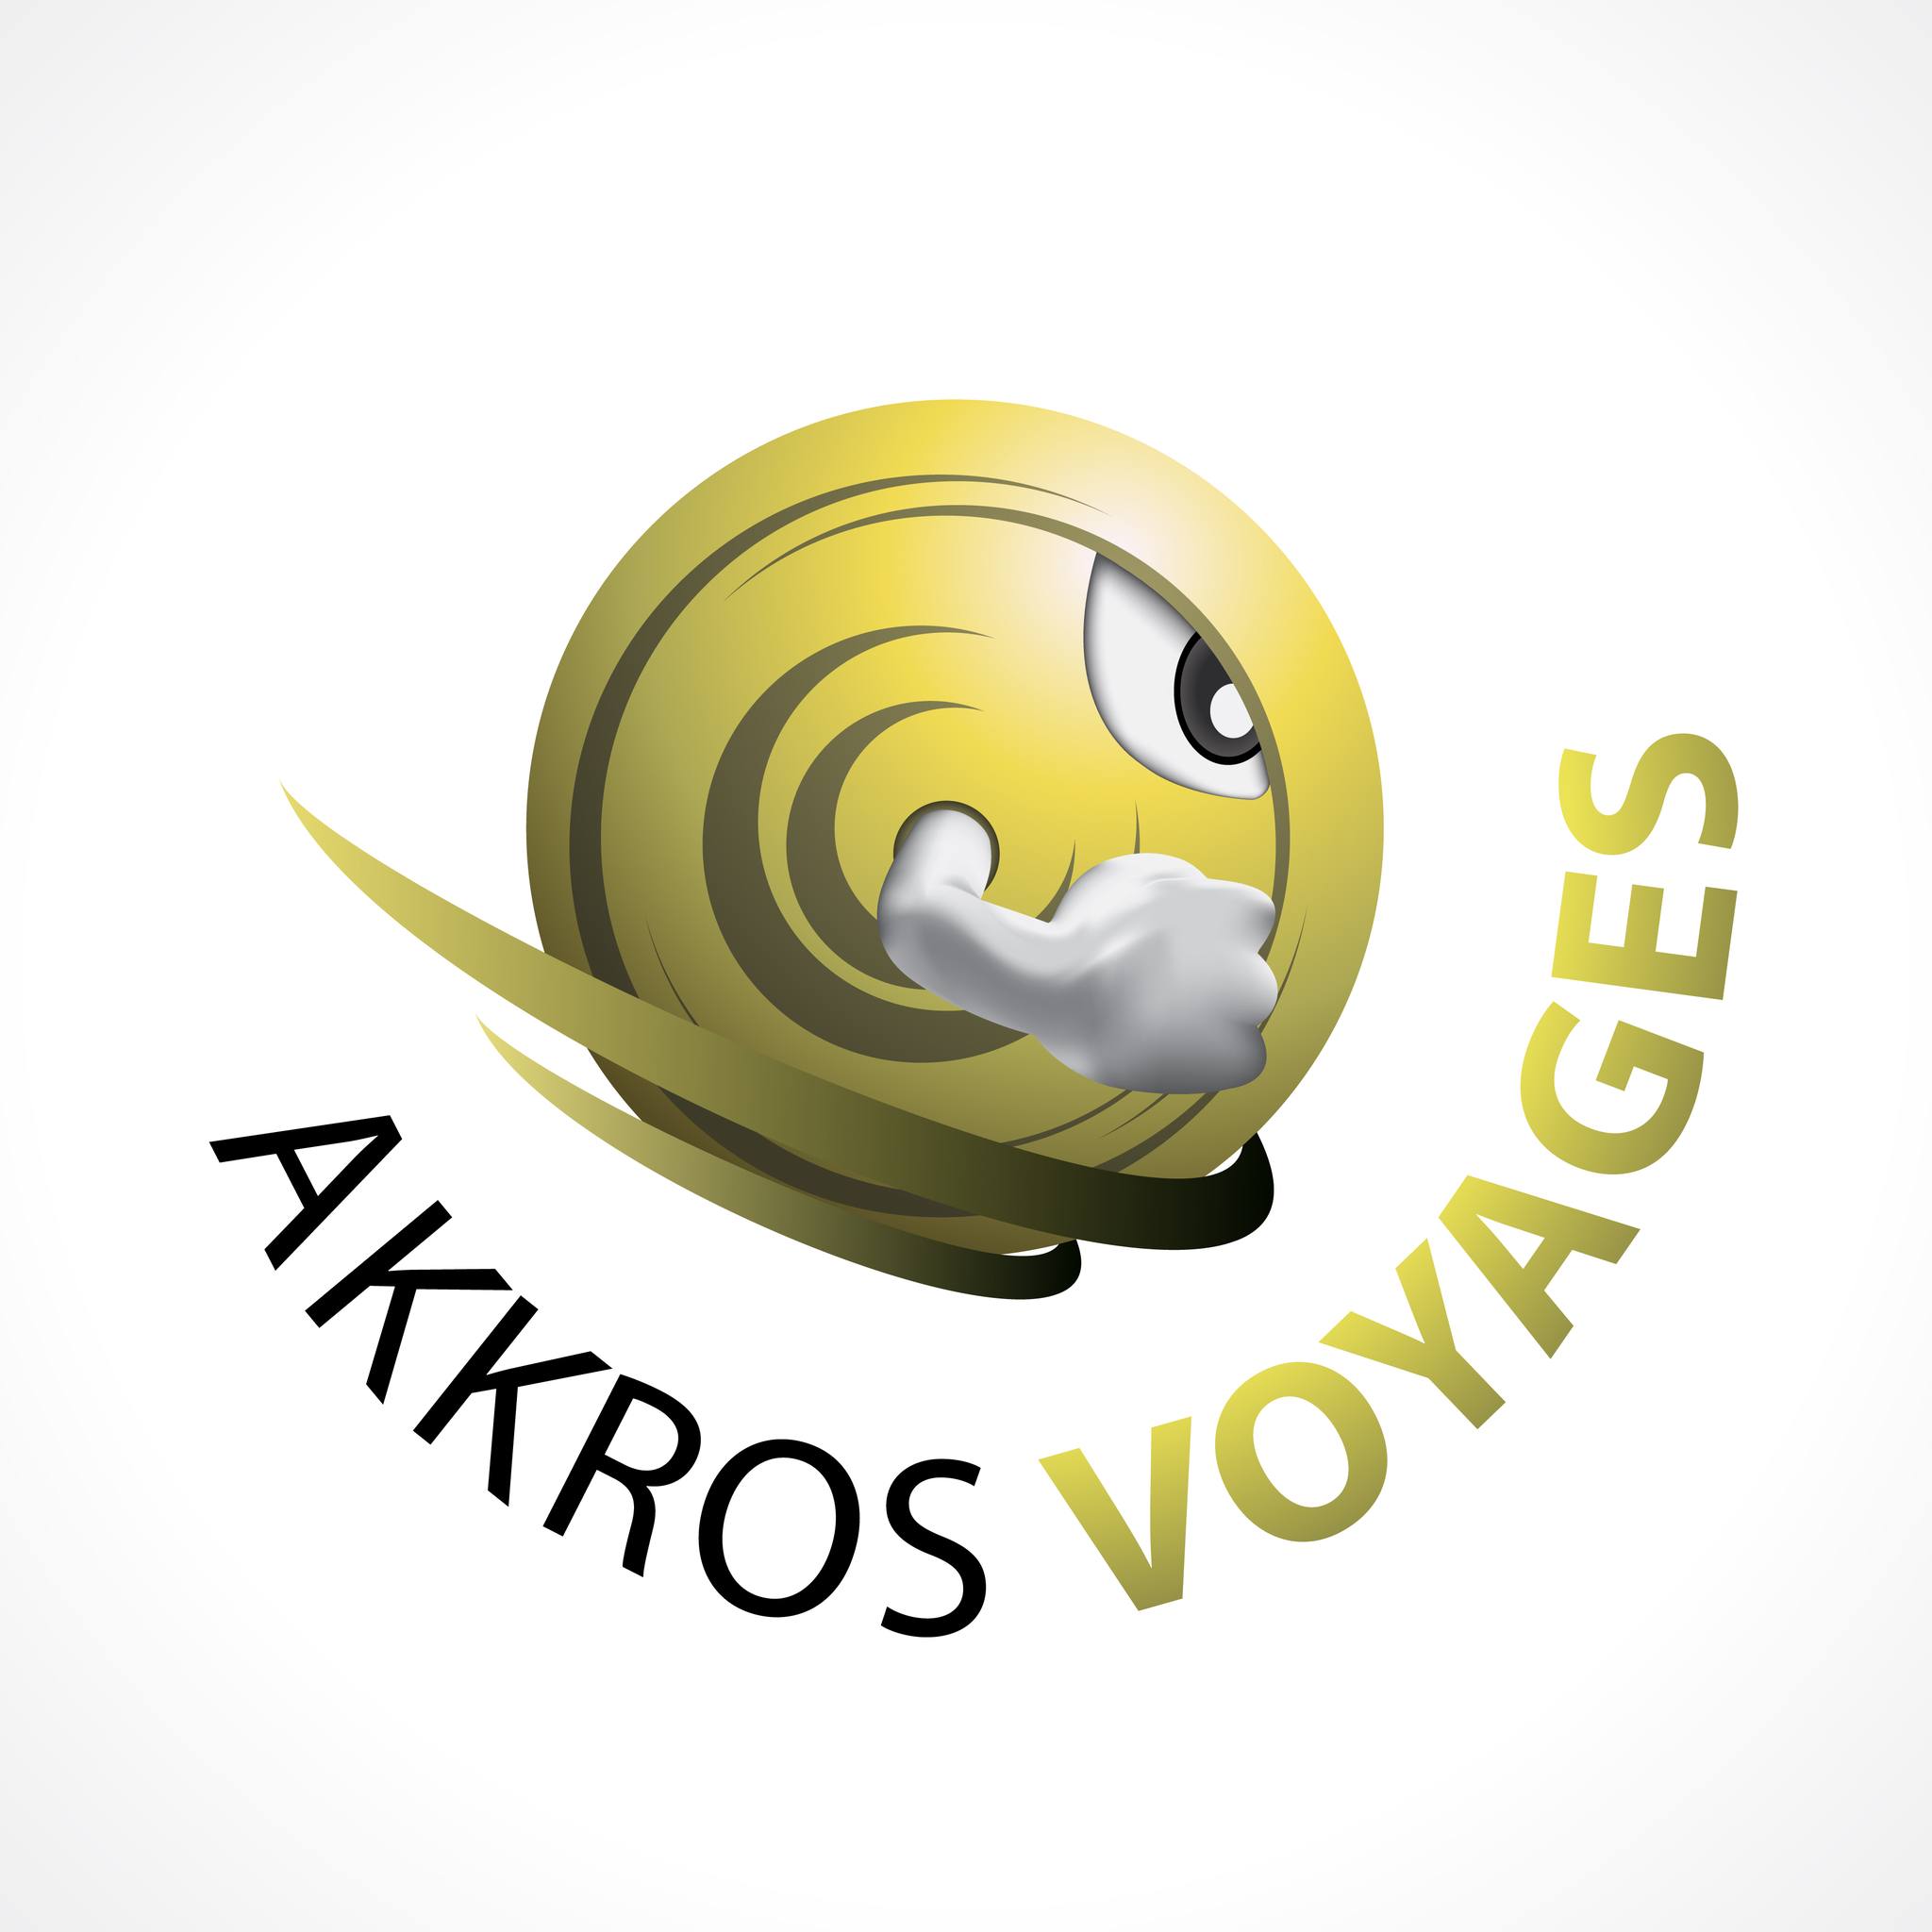 Akkros Voyages